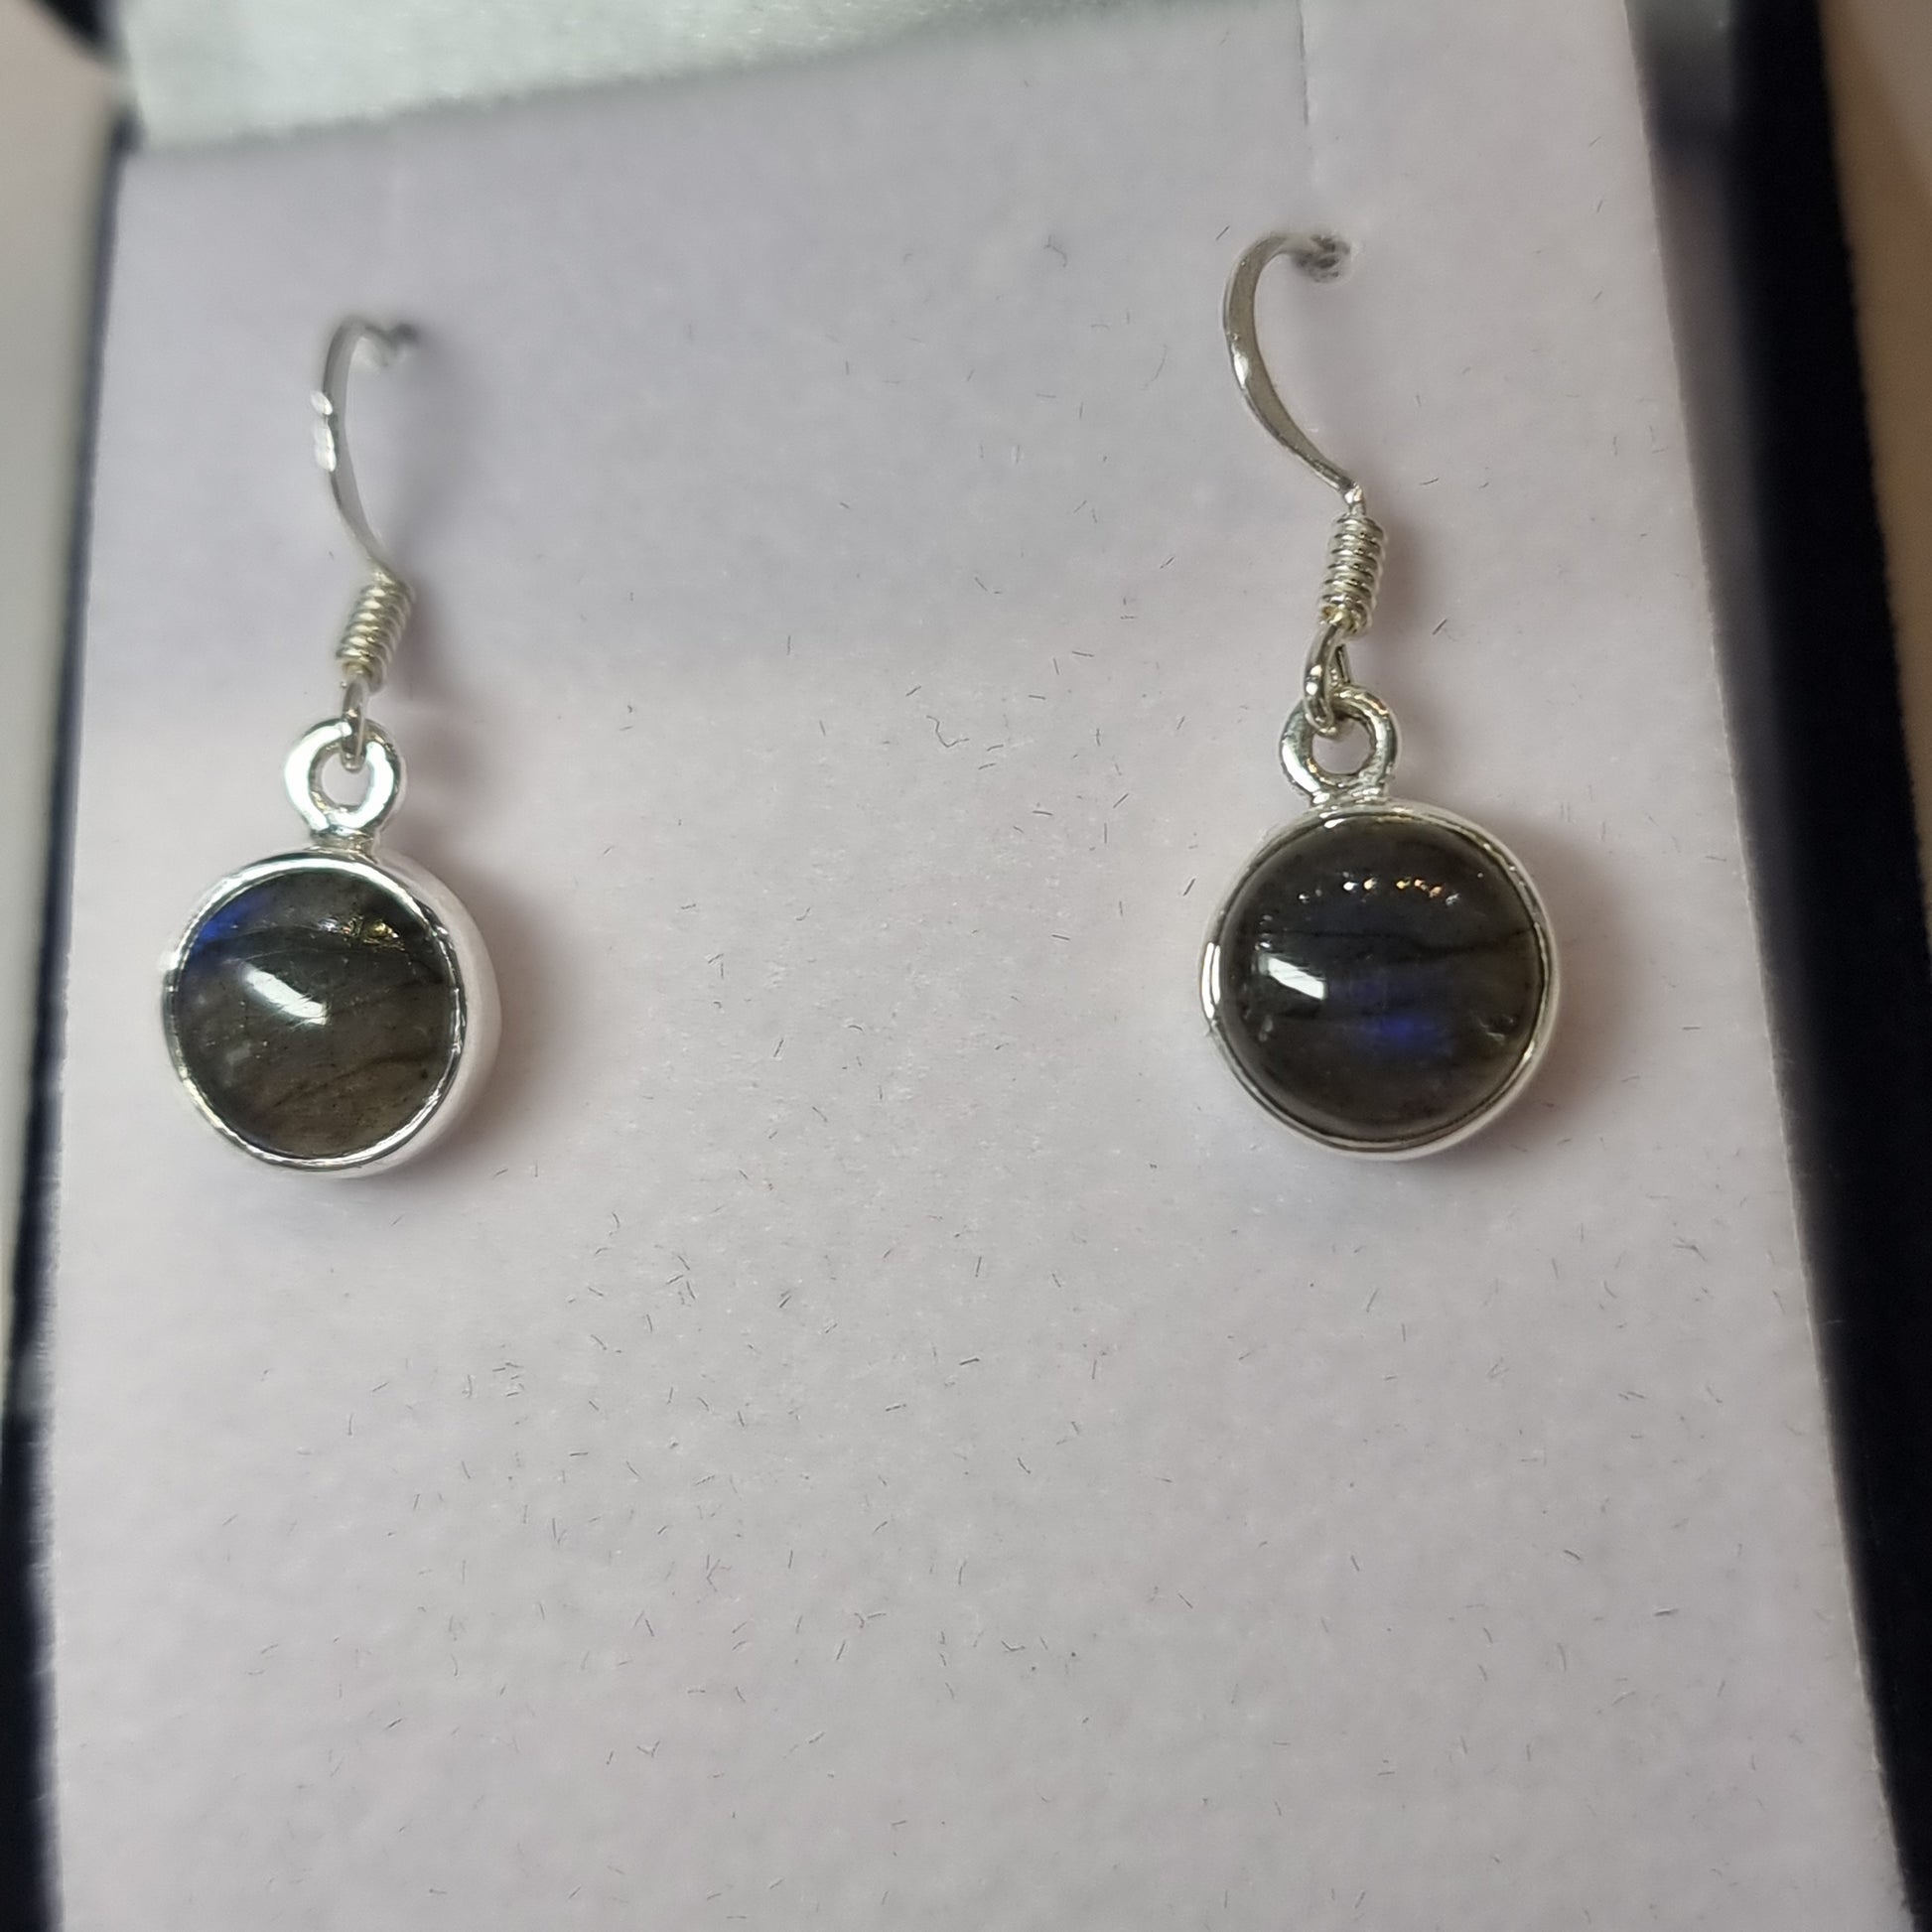 Labradorite earrings - Rivendell Shop